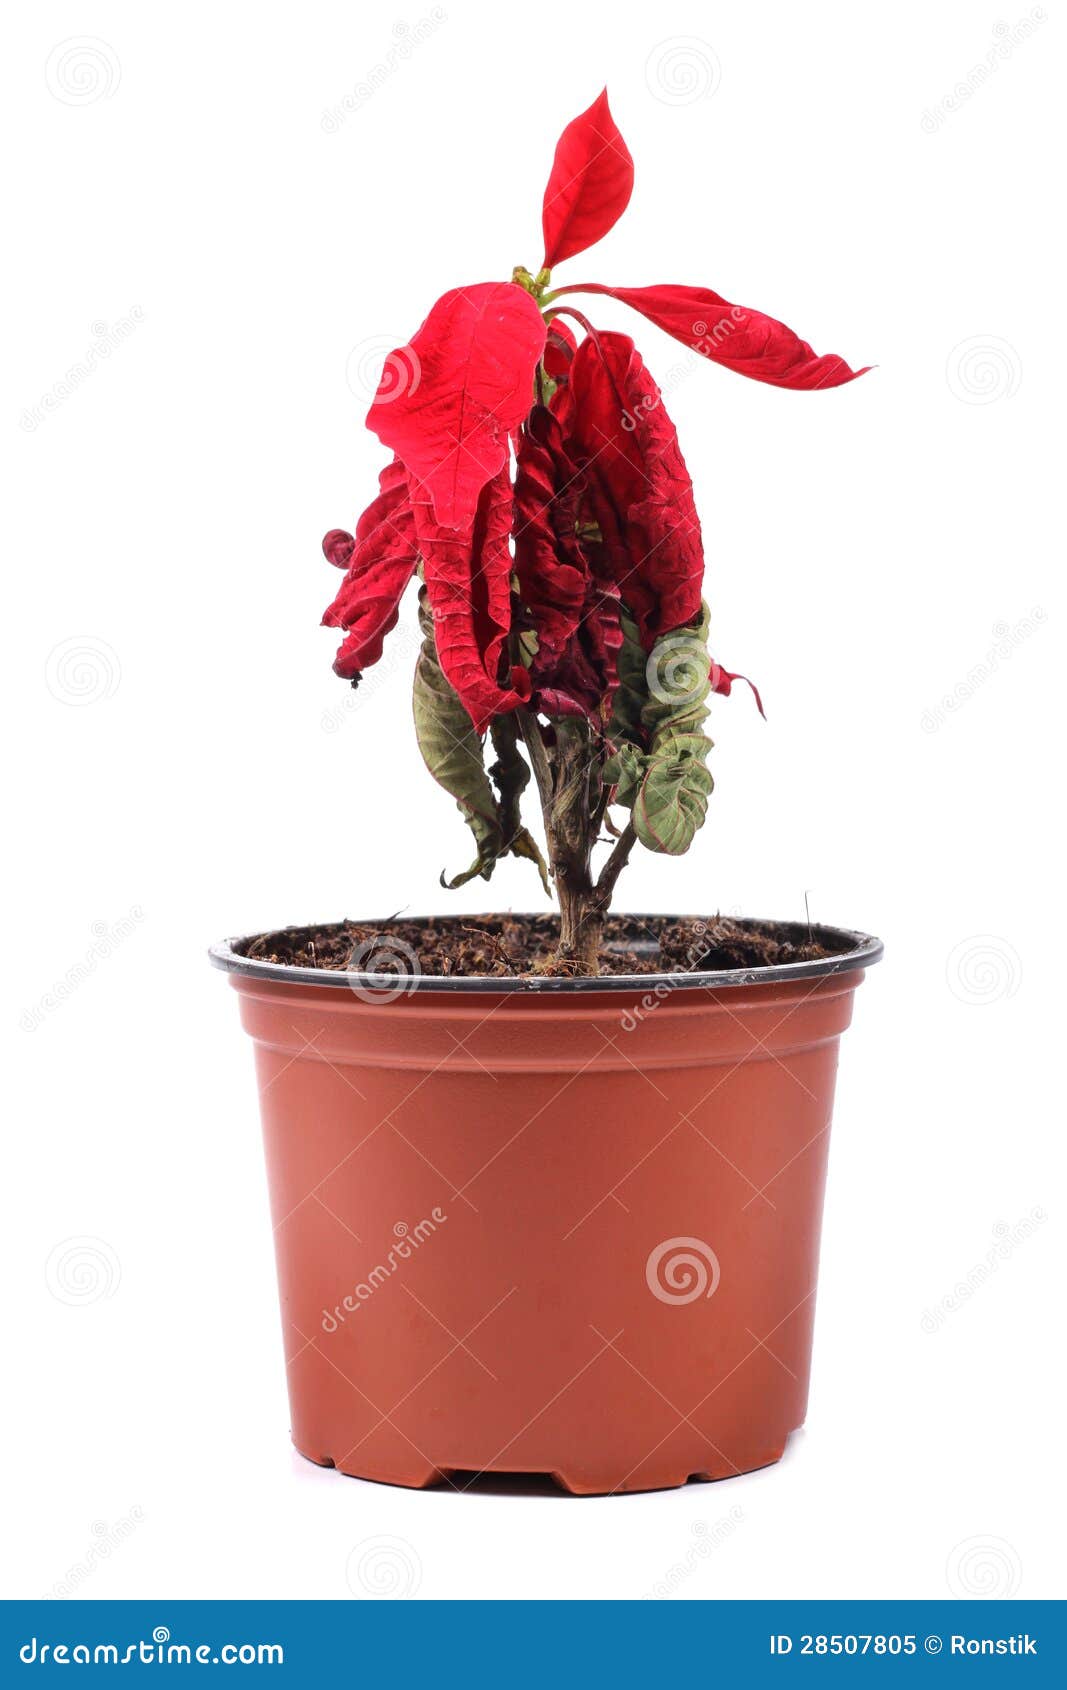 wilted red flower in a flowerpot